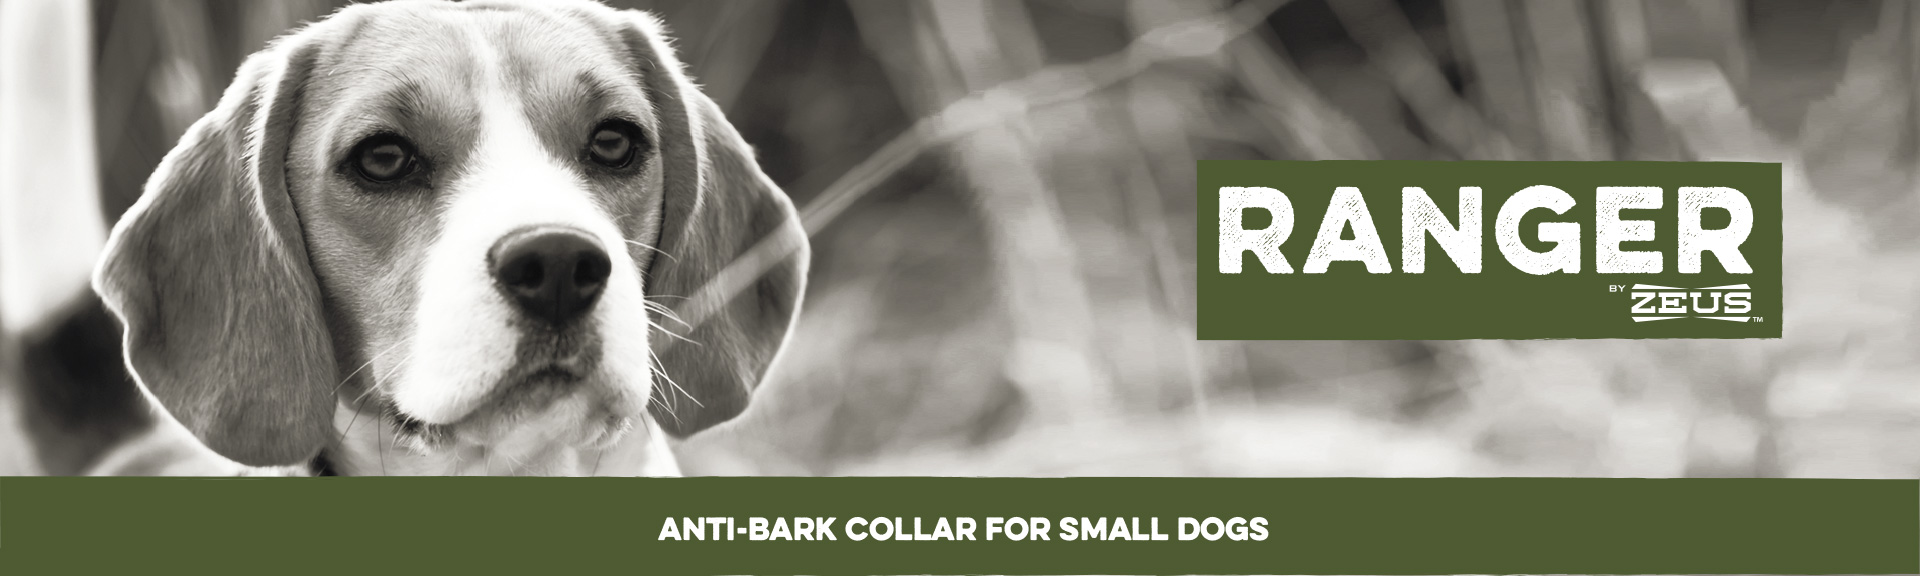 Zeus Ranger Anti-Bark Collar for Small Dogs